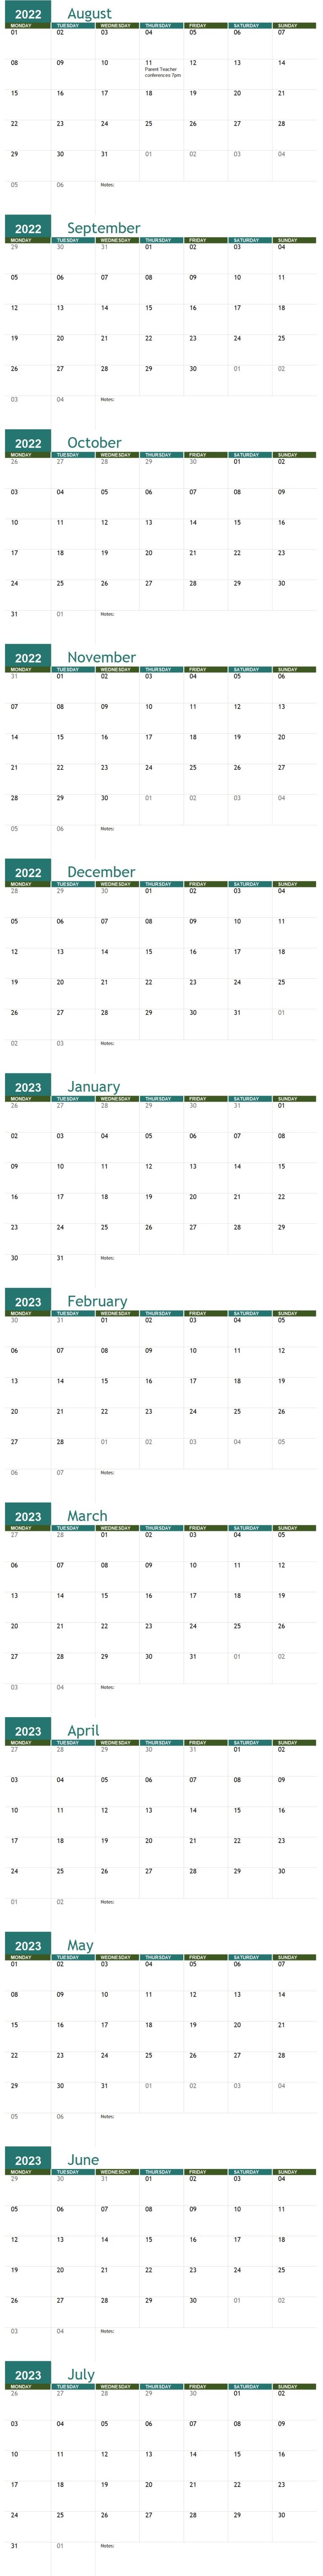 Academic Calendar Template In Excel (Download.xlsx)